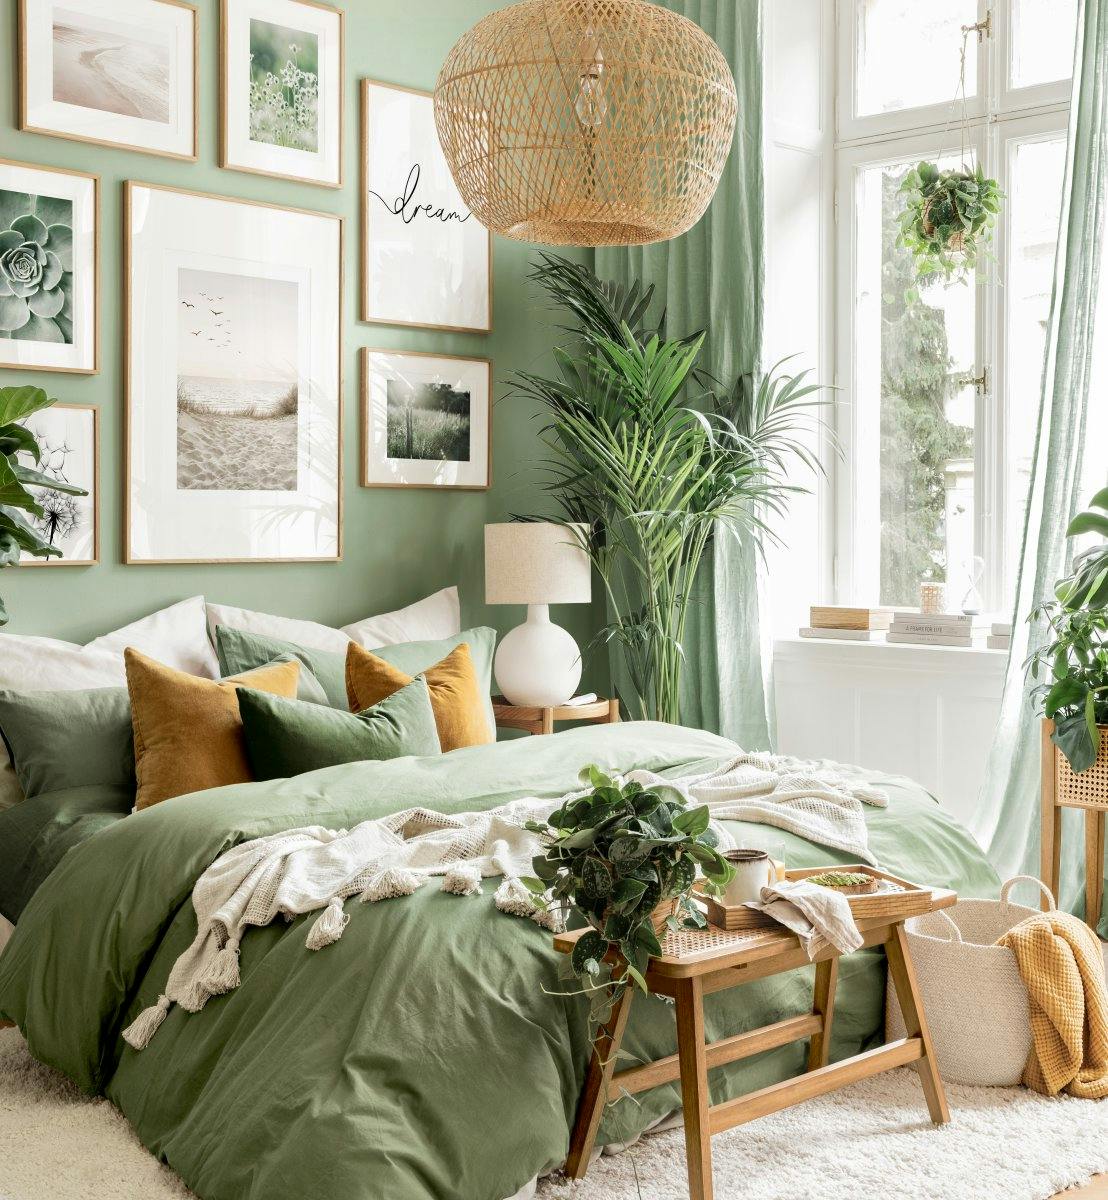 Zielona naturalna galeria scienna plakaty mindfulness zielona sypialnia debowe ramki